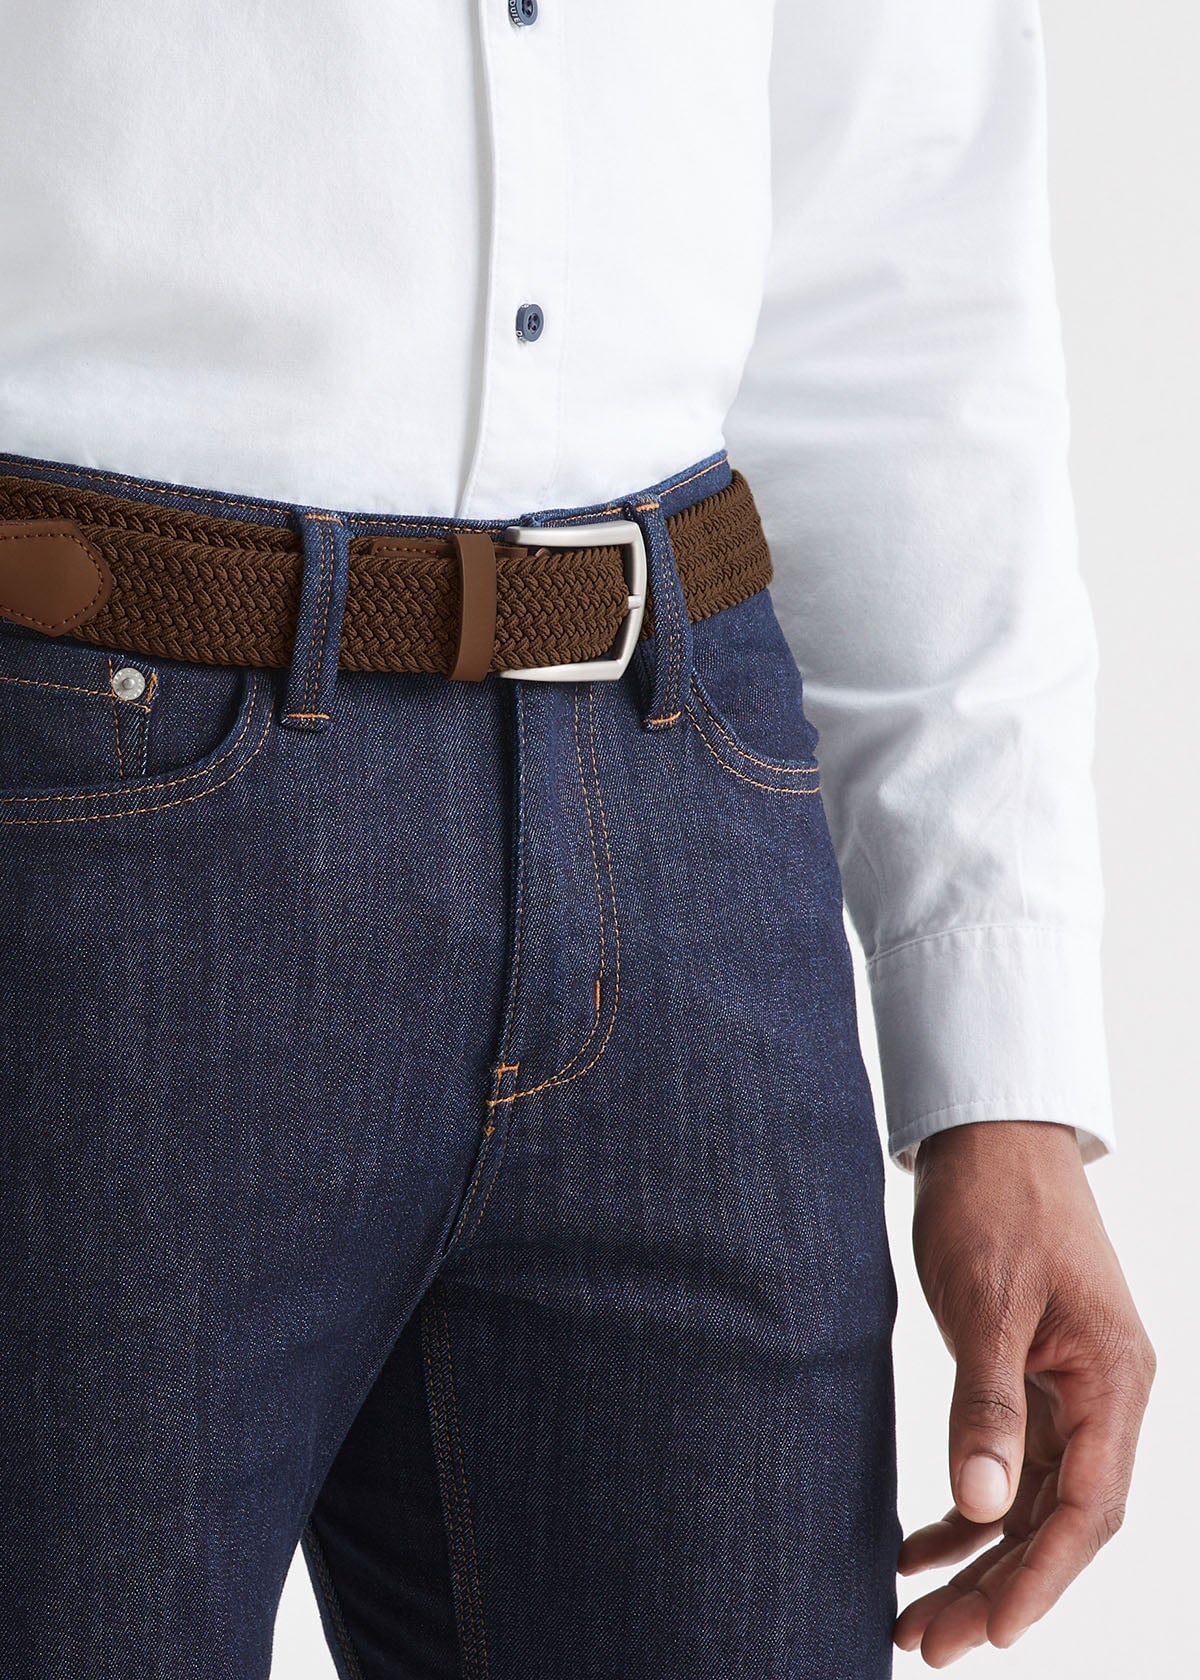 Men's Brighton Toronto Taper Leather Belt Brown #10707